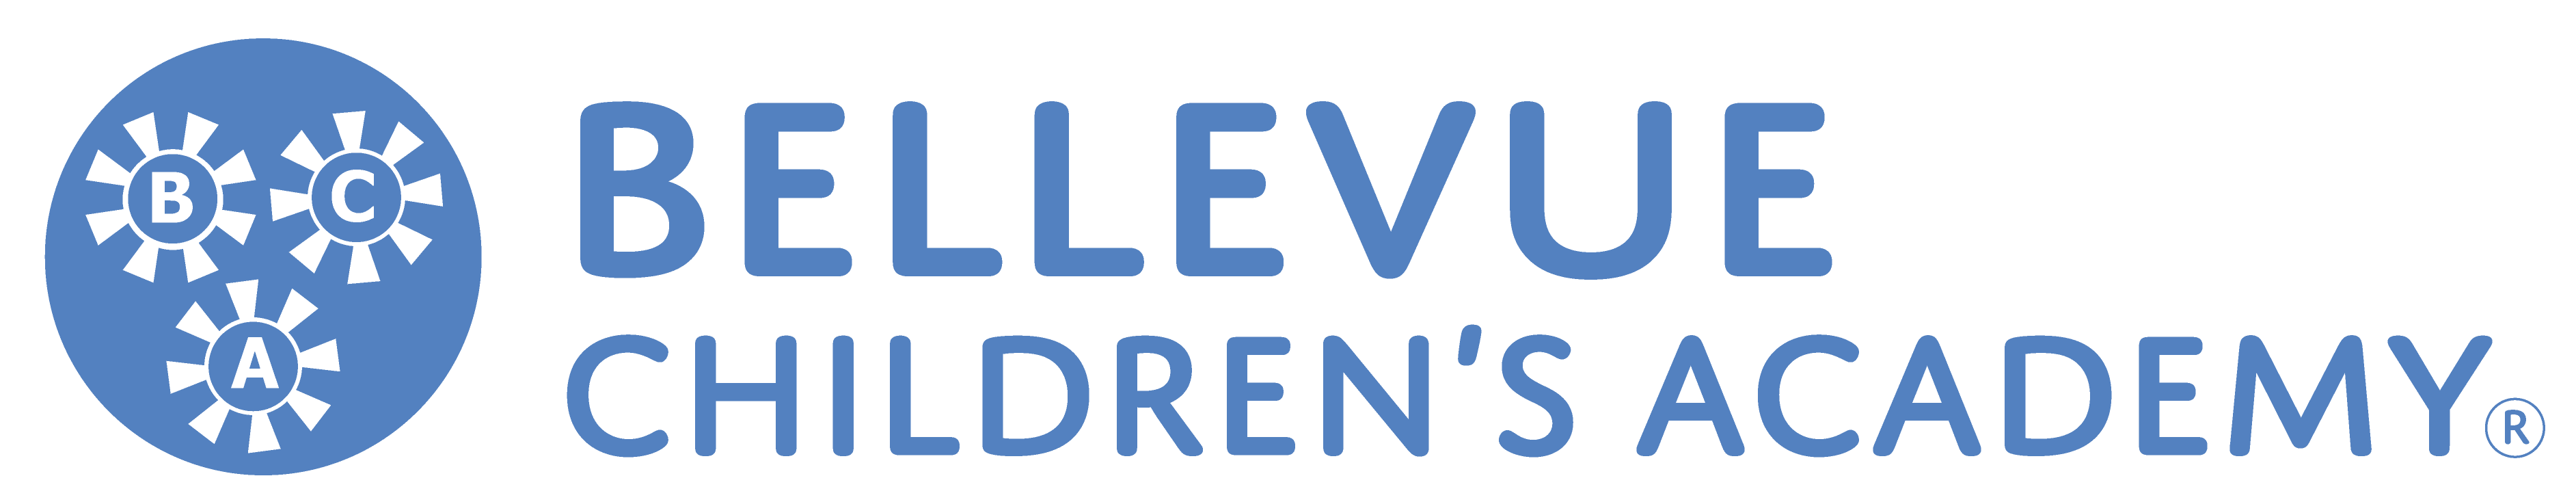 Bellevue Children’s Academy／ベルビュー・チルドレンズ・アカデミーロゴ